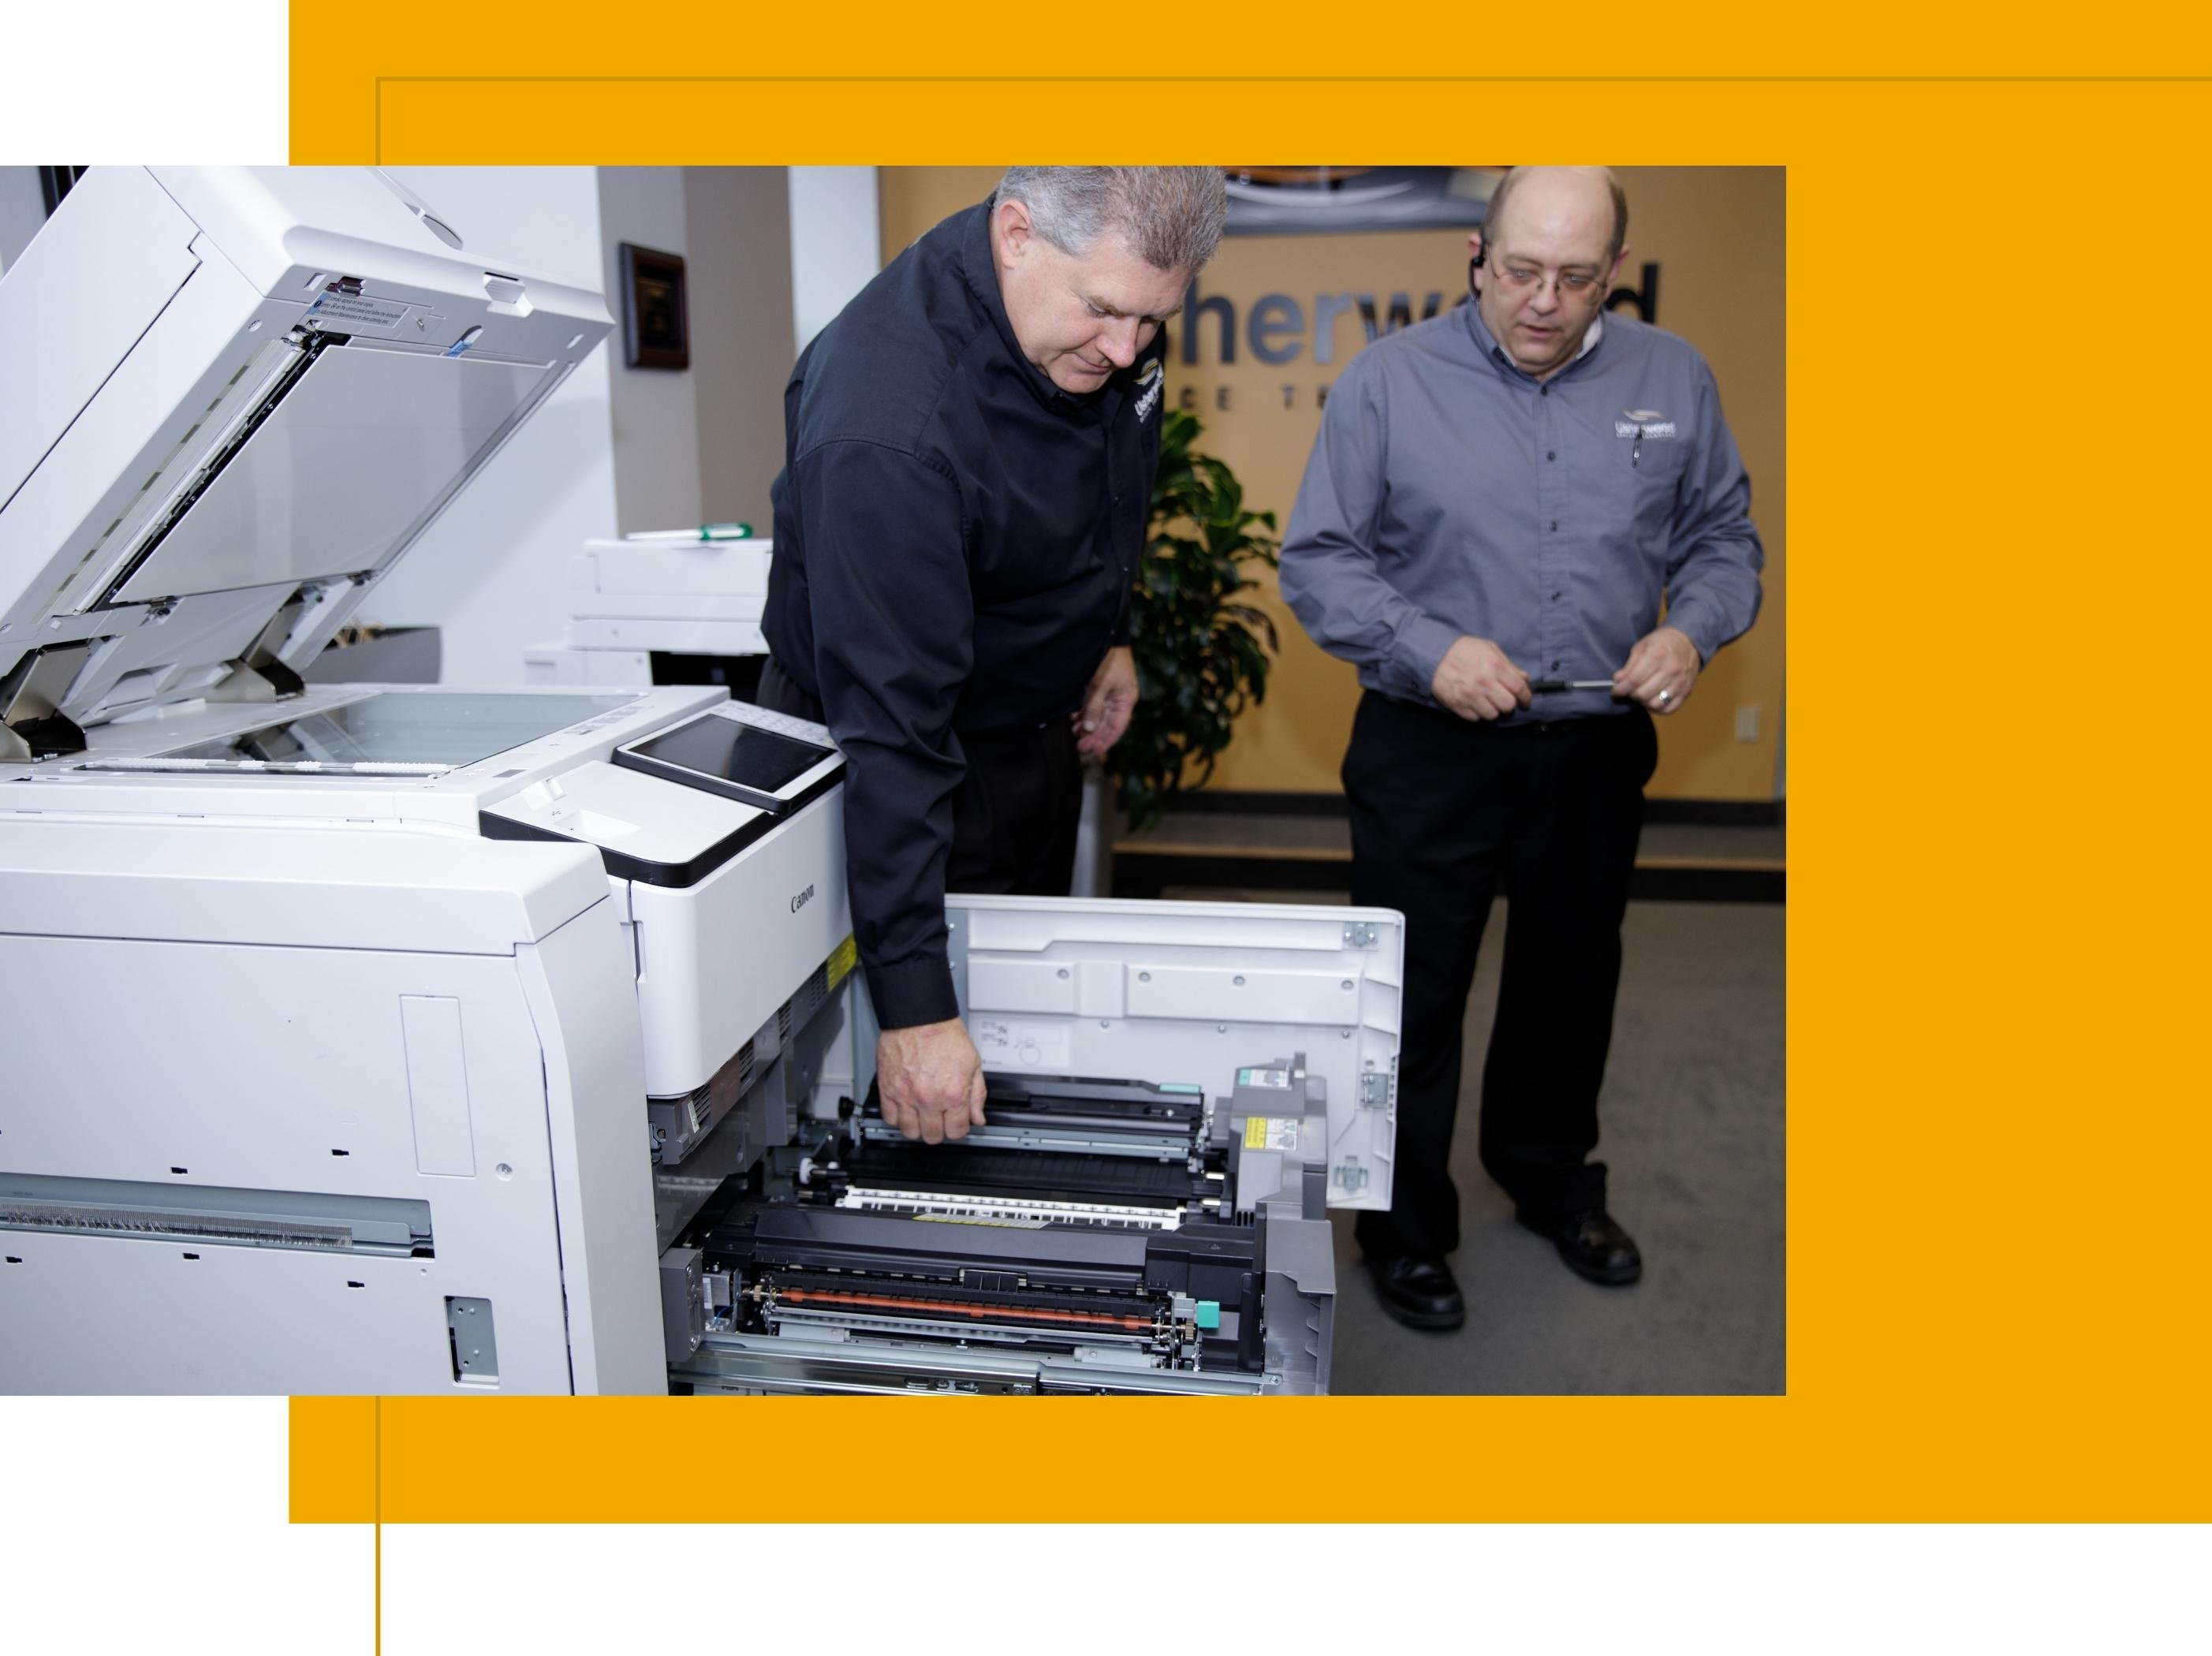 Two technicians looking over an open copier